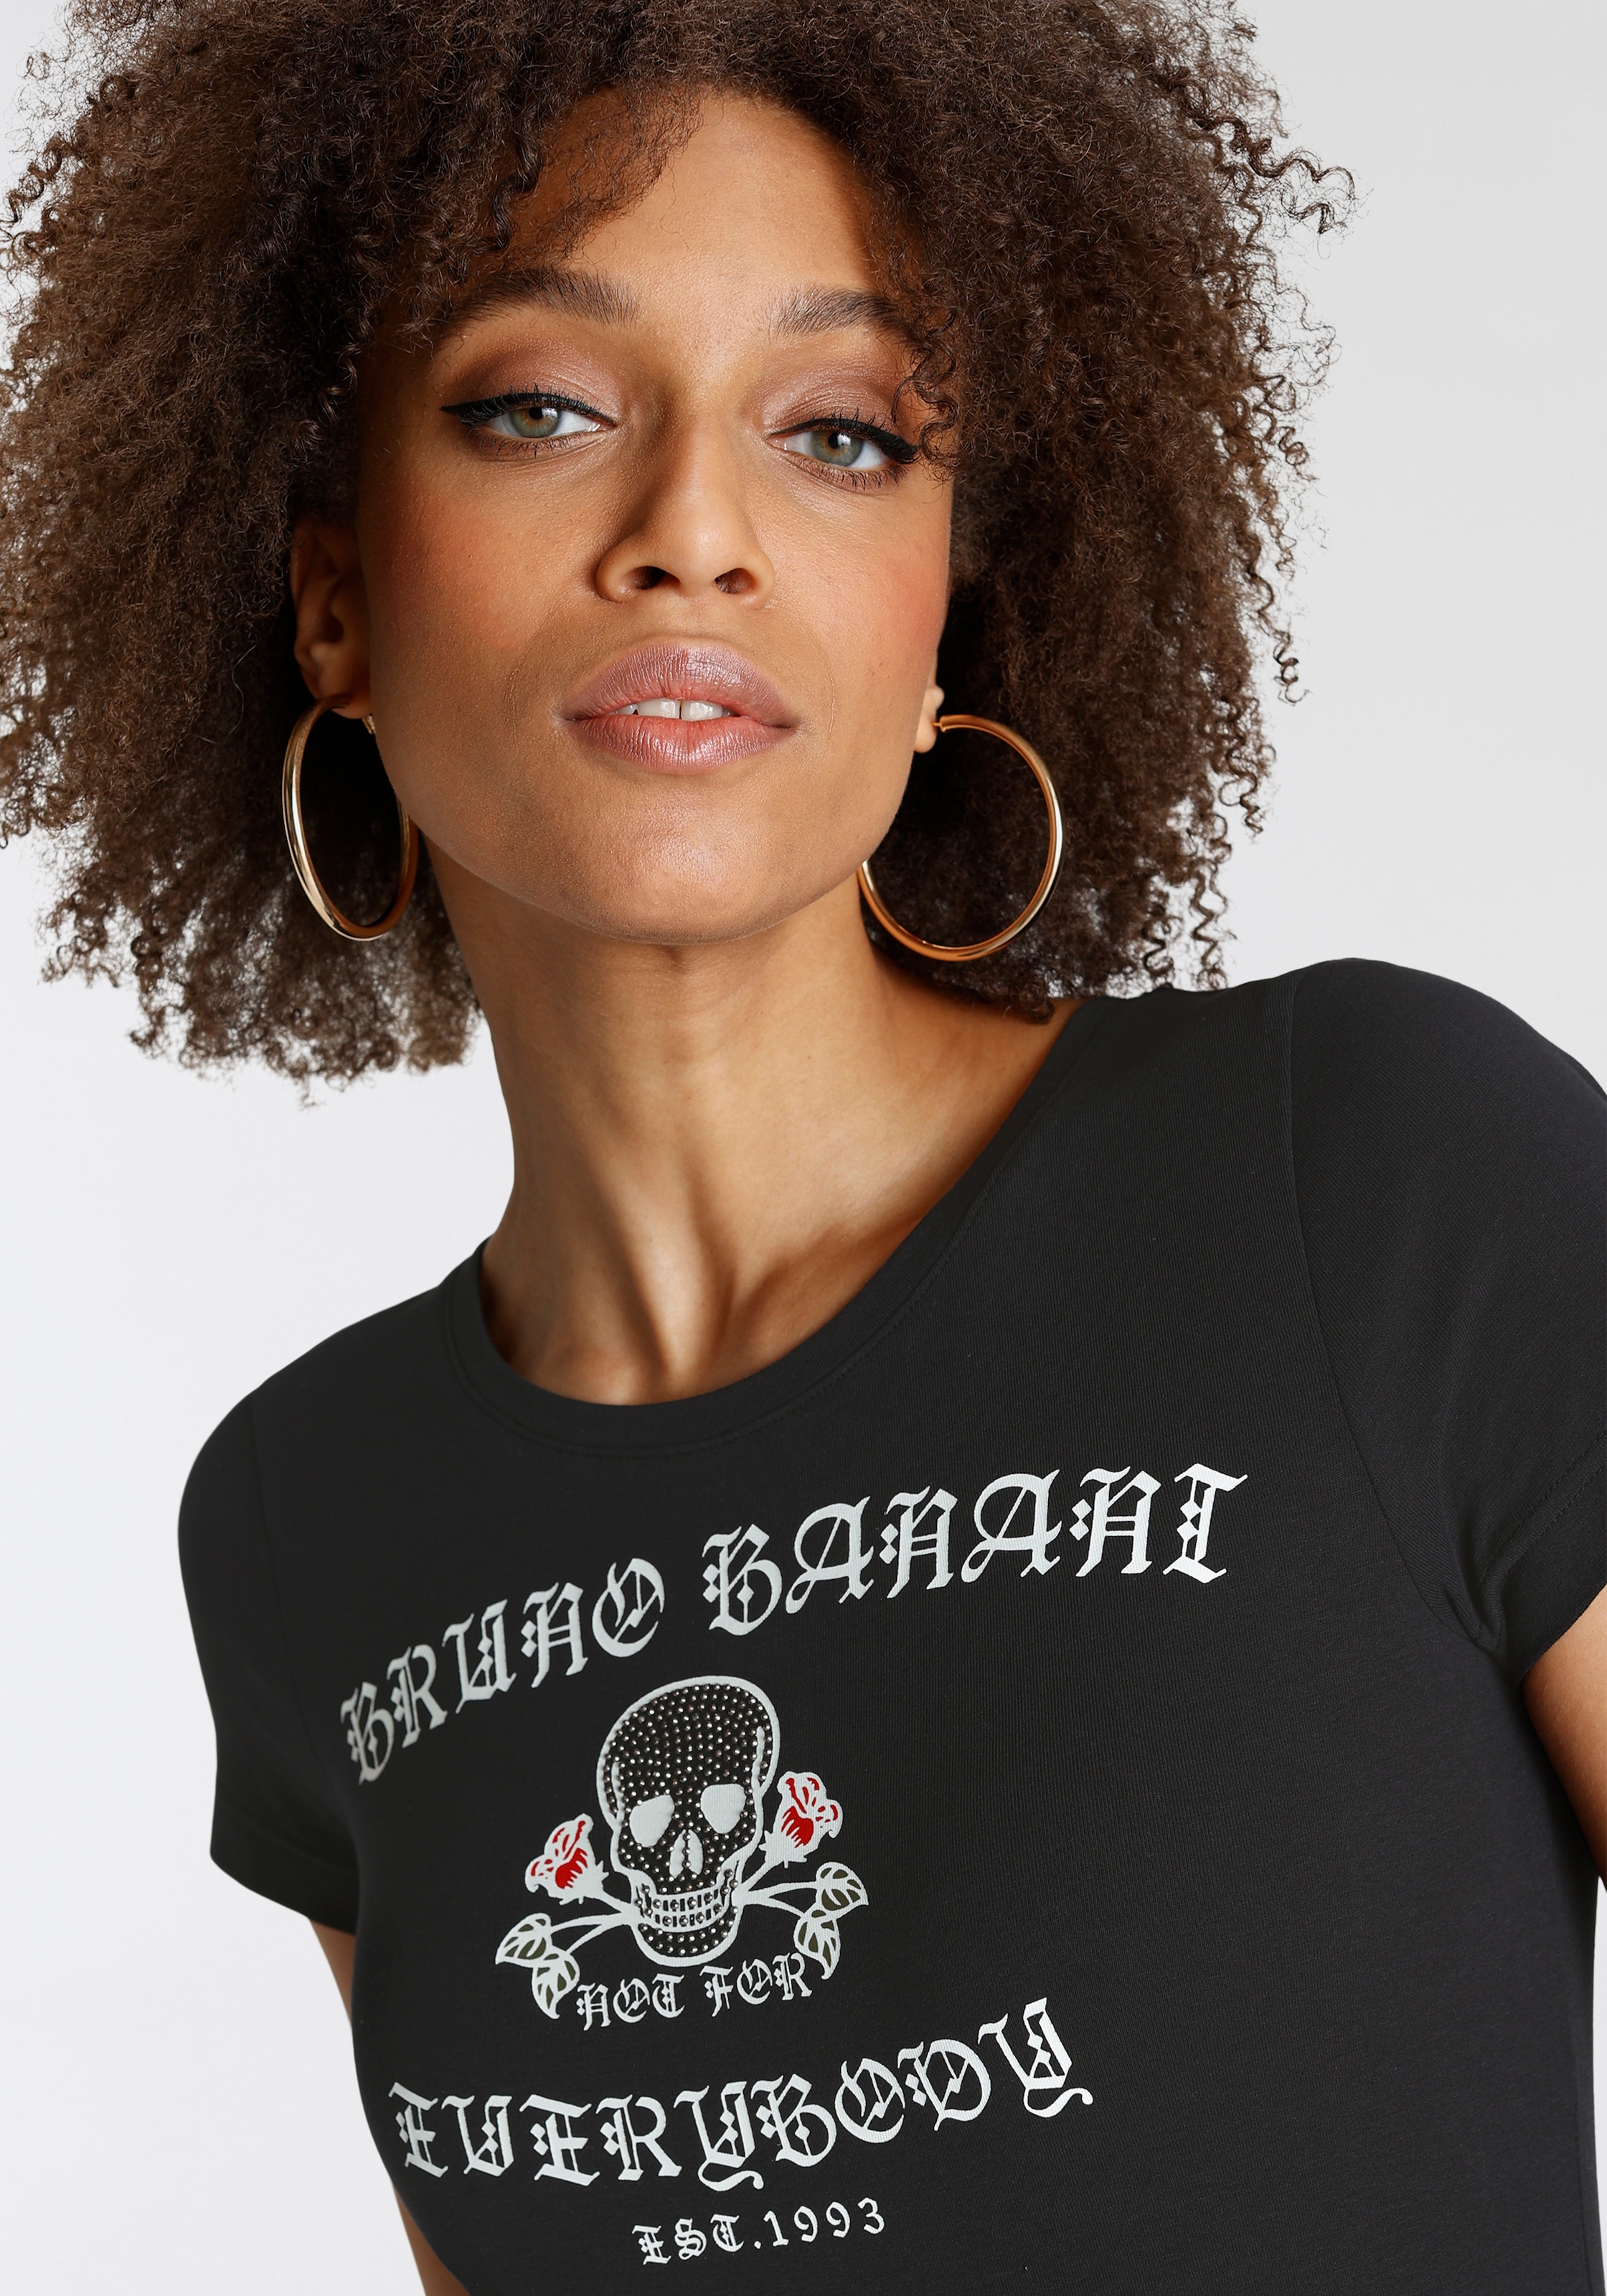 Banani kaufen mit coolem Bruno Print T-Shirt, BAUR |